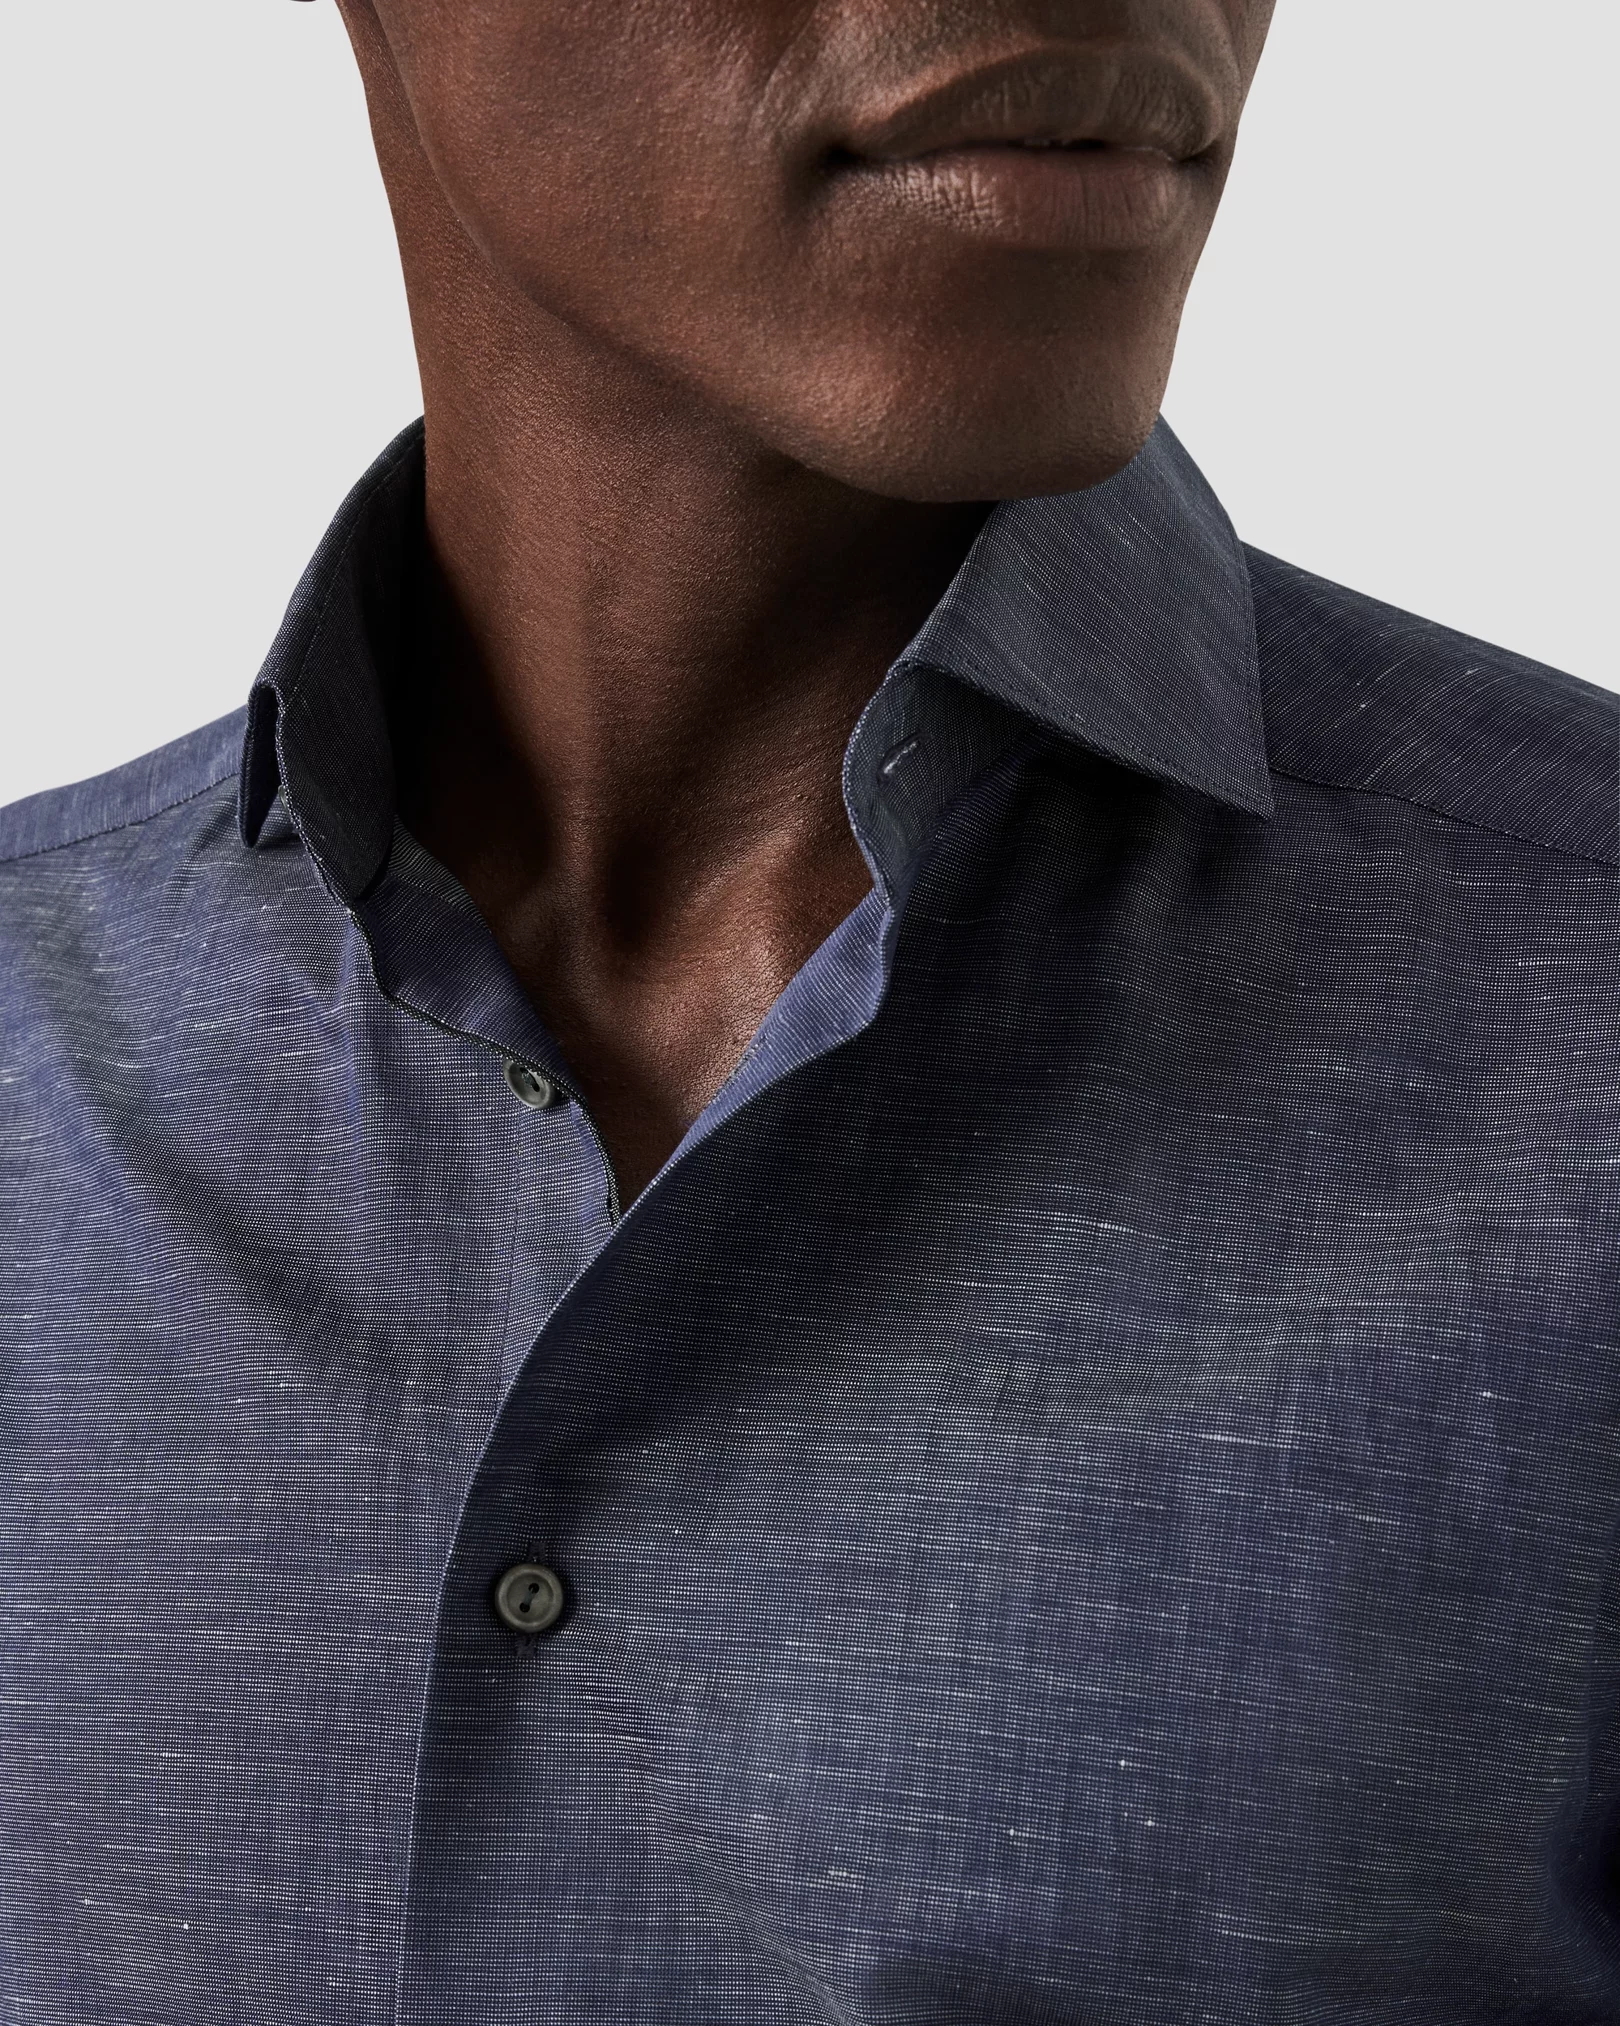 Eton - solid navy cotton linen shirt